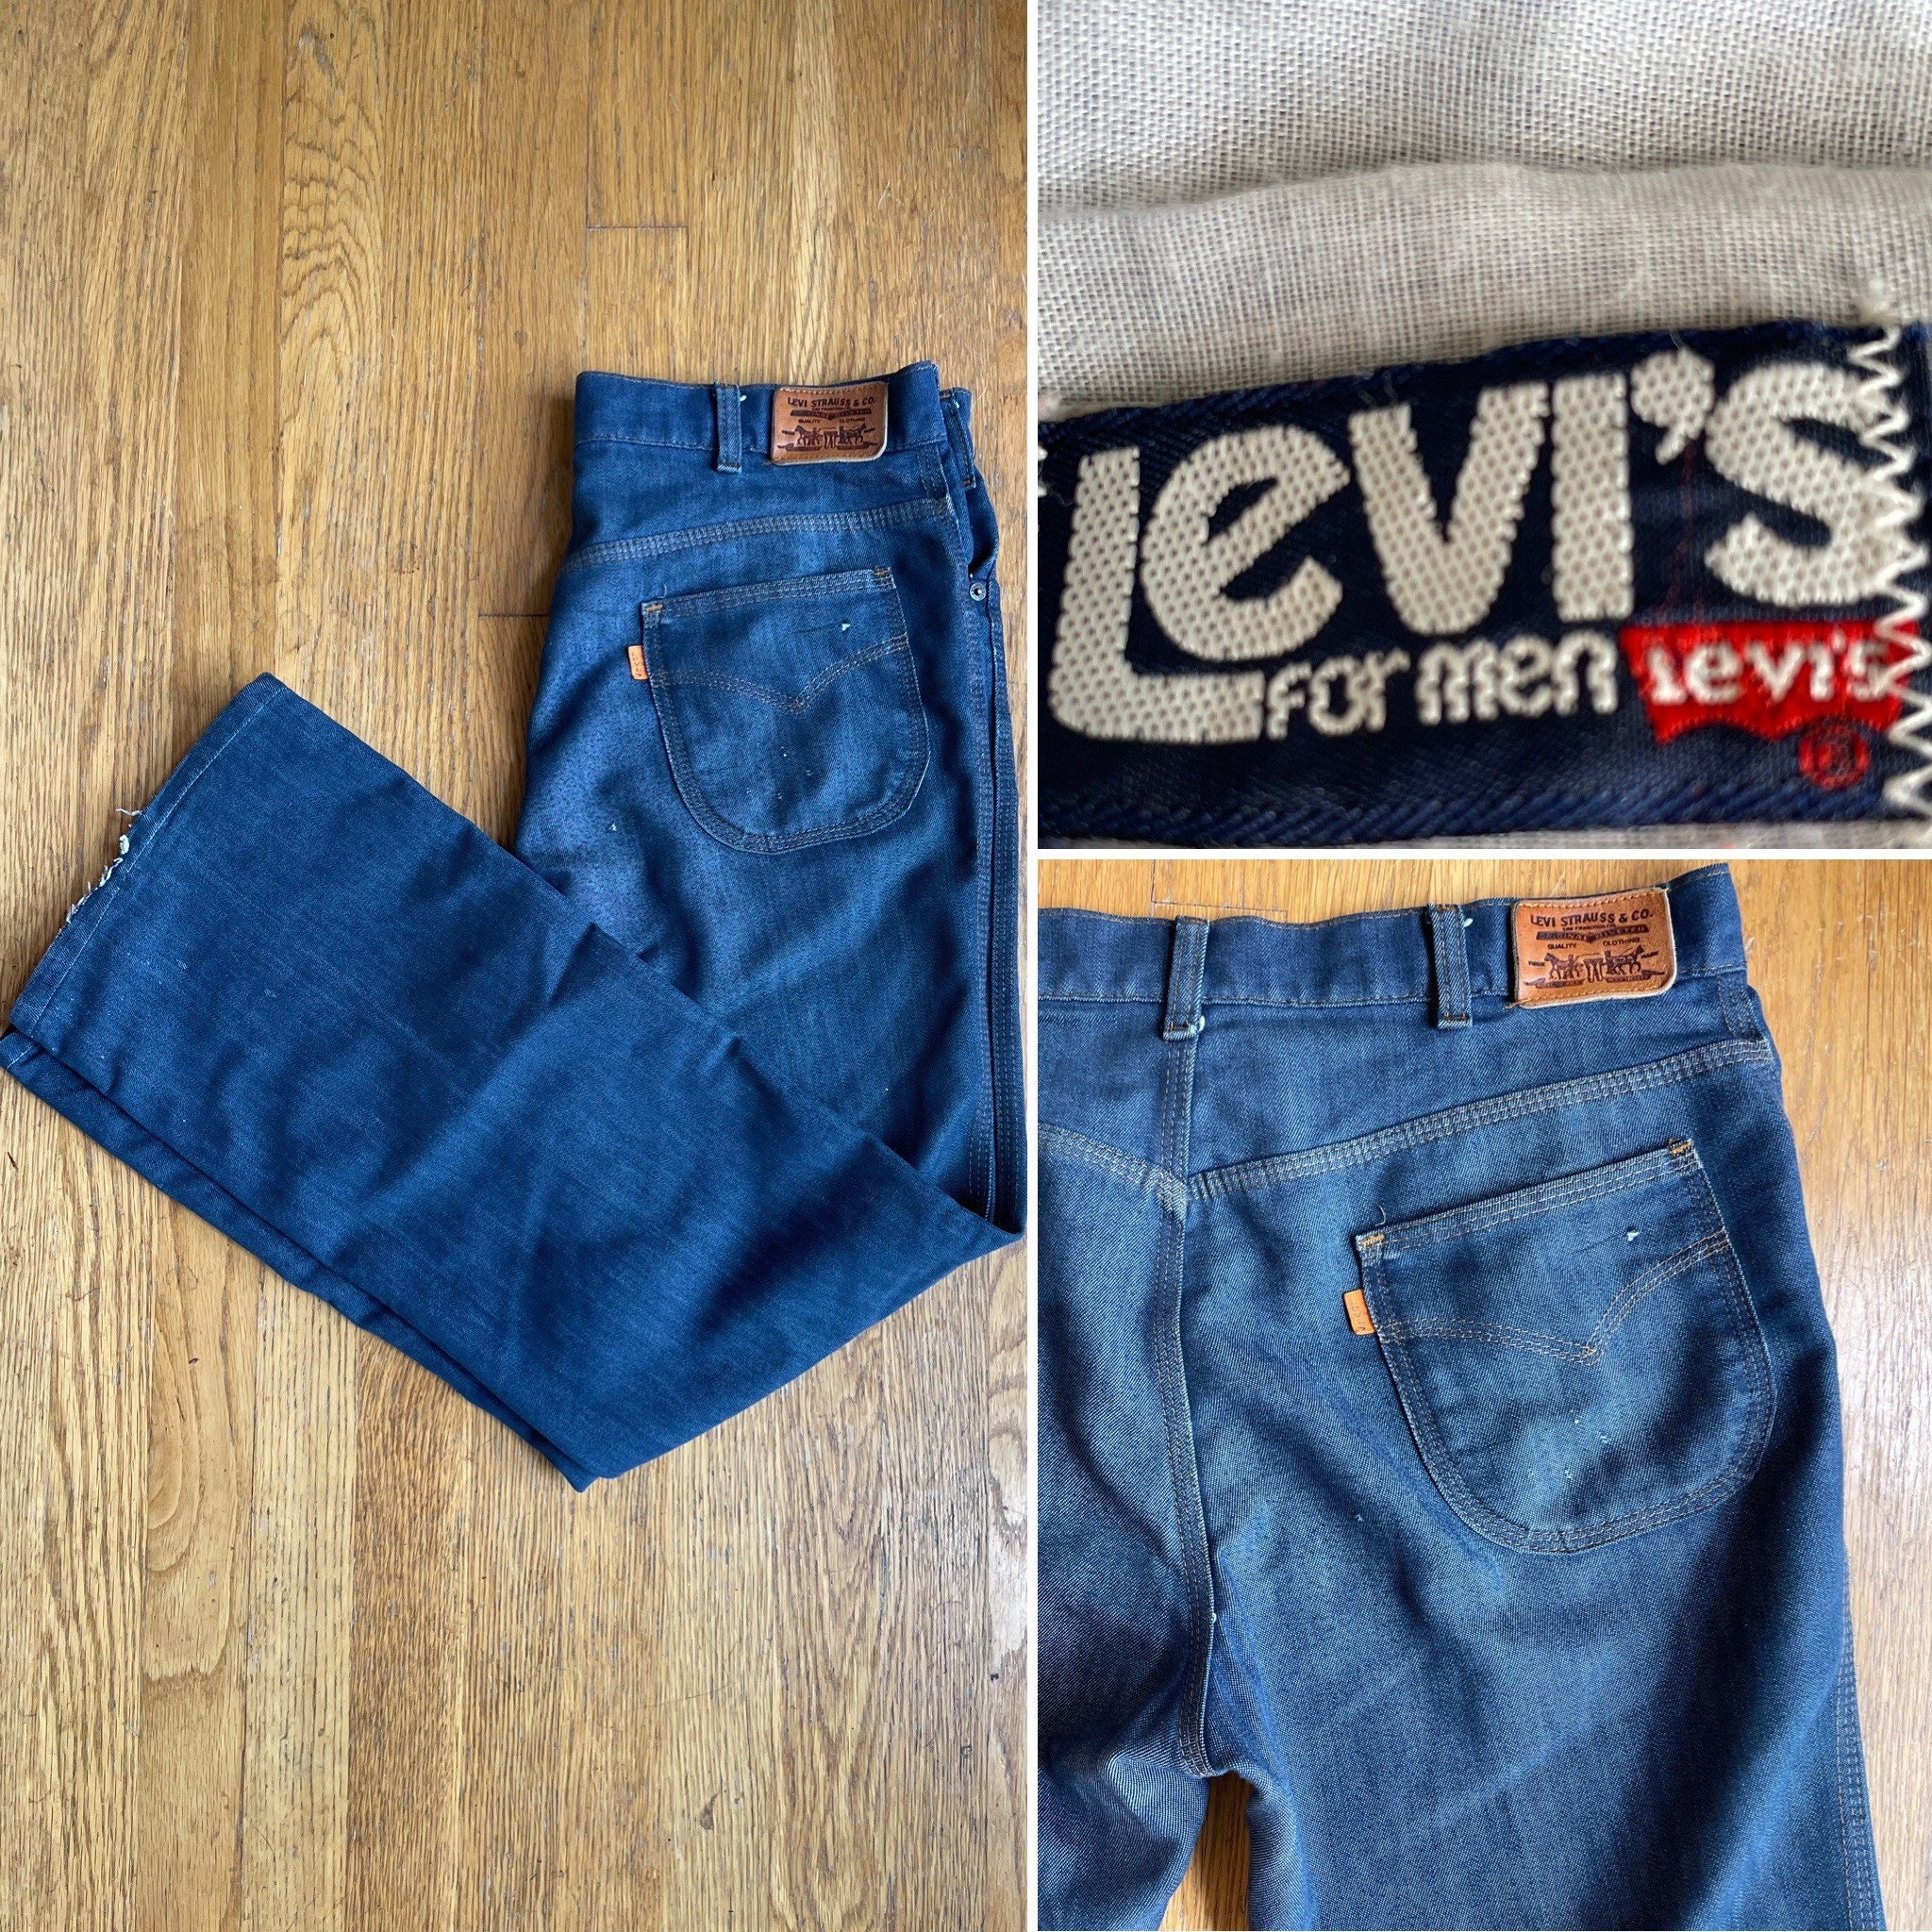 LVC Levi’s Vintage Clothing Men’s Jeans Flares 645 Orange Tab Big E 27x32  Womens